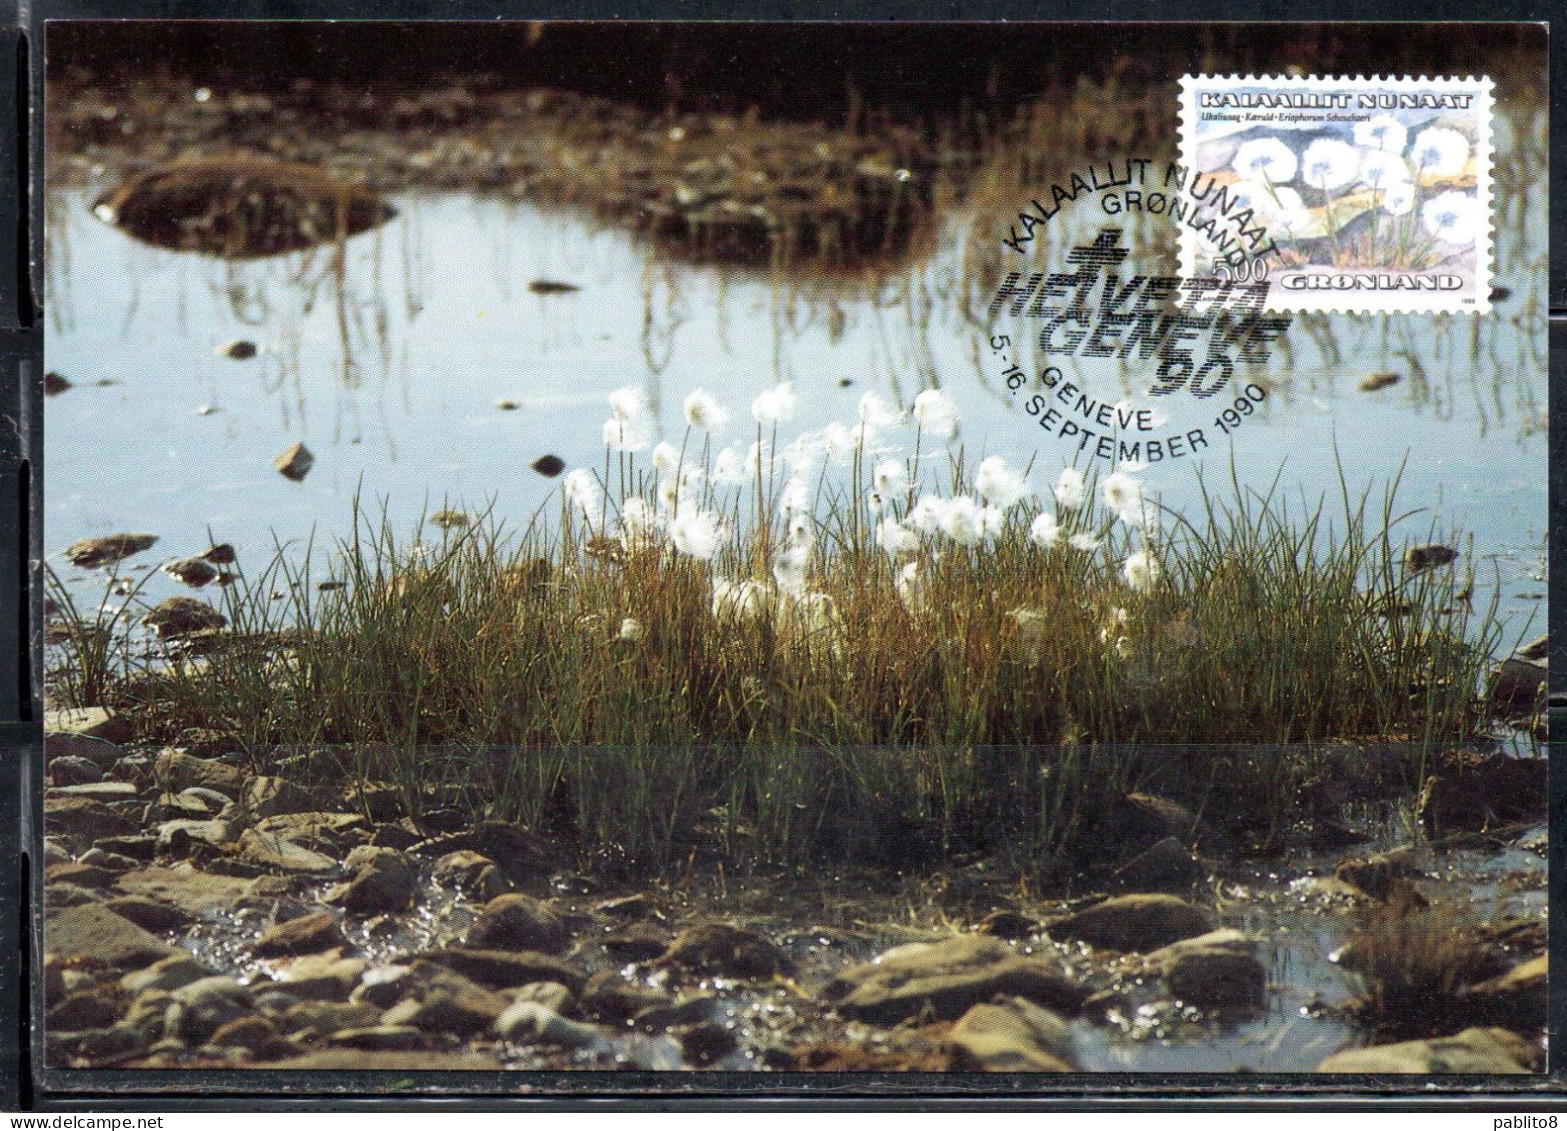 GREENLAND GRONLANDS GROENLANDIA GRØNLAND 1989 1992 1990 FLORA PLANTS ERIOPHORUM SCHEUCHZERI 5k MAXI MAXIMUM CARD CARTE - Maximum Cards